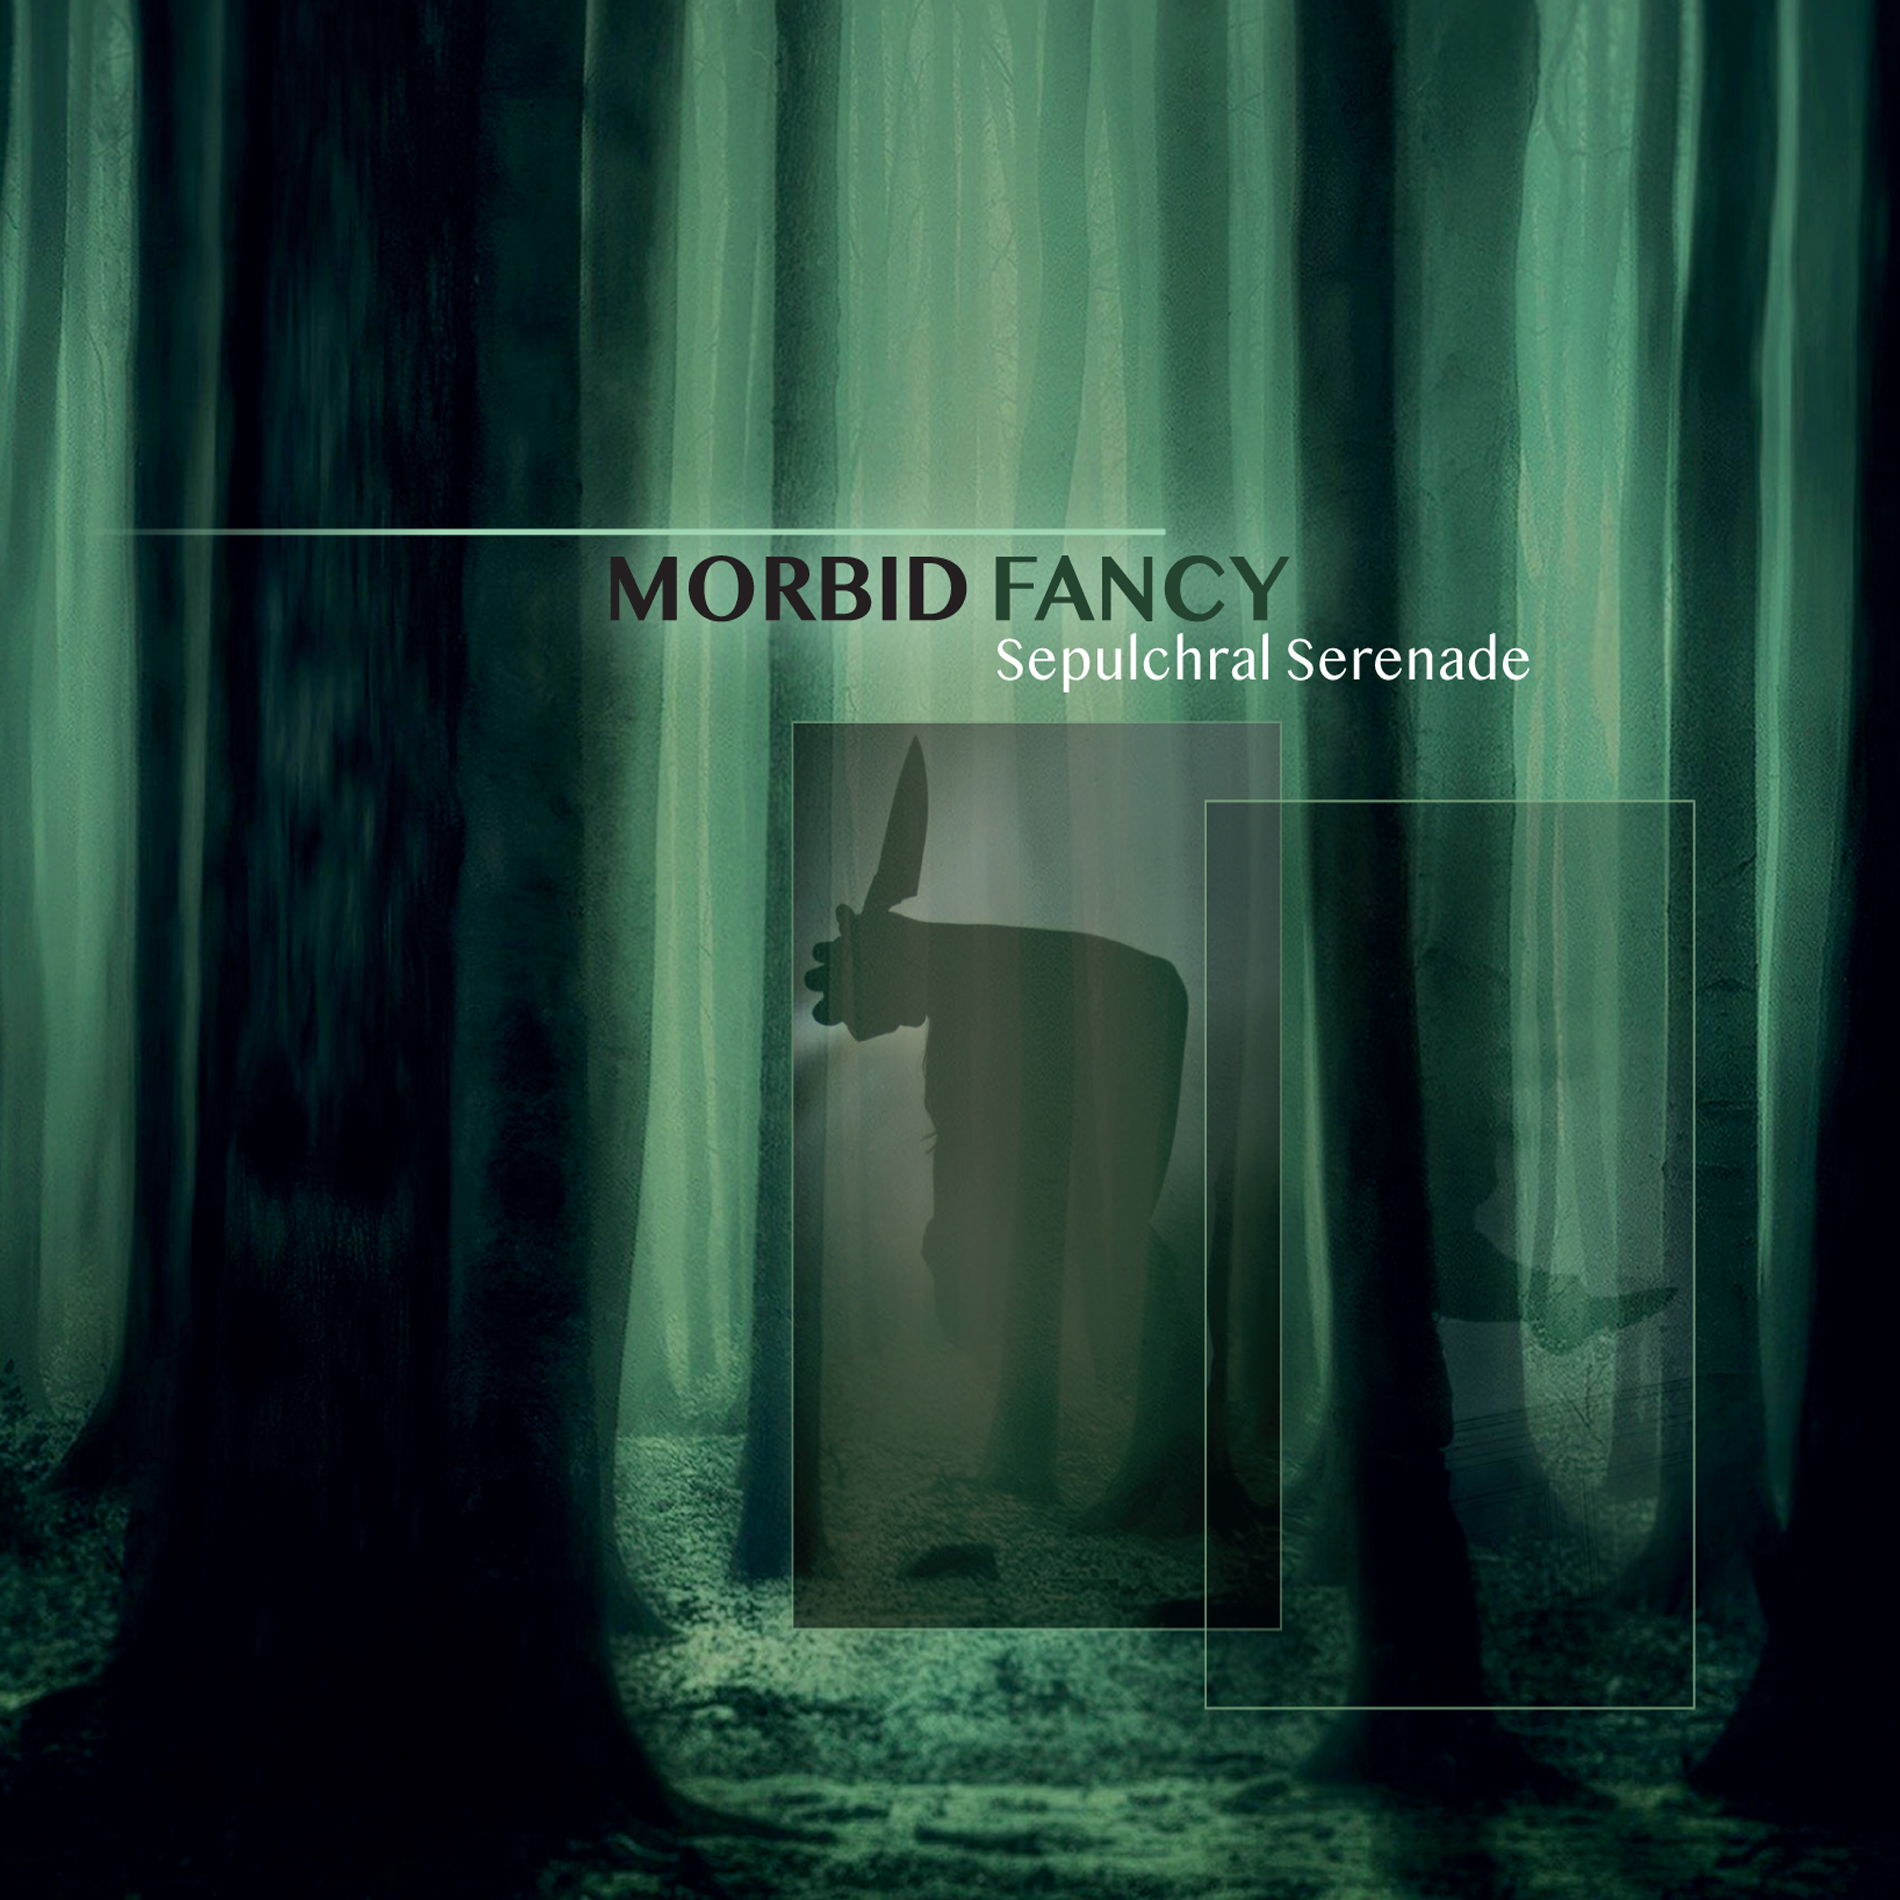 Morbid fancy - Sepulchral Serenade / CD SOLD OUT!